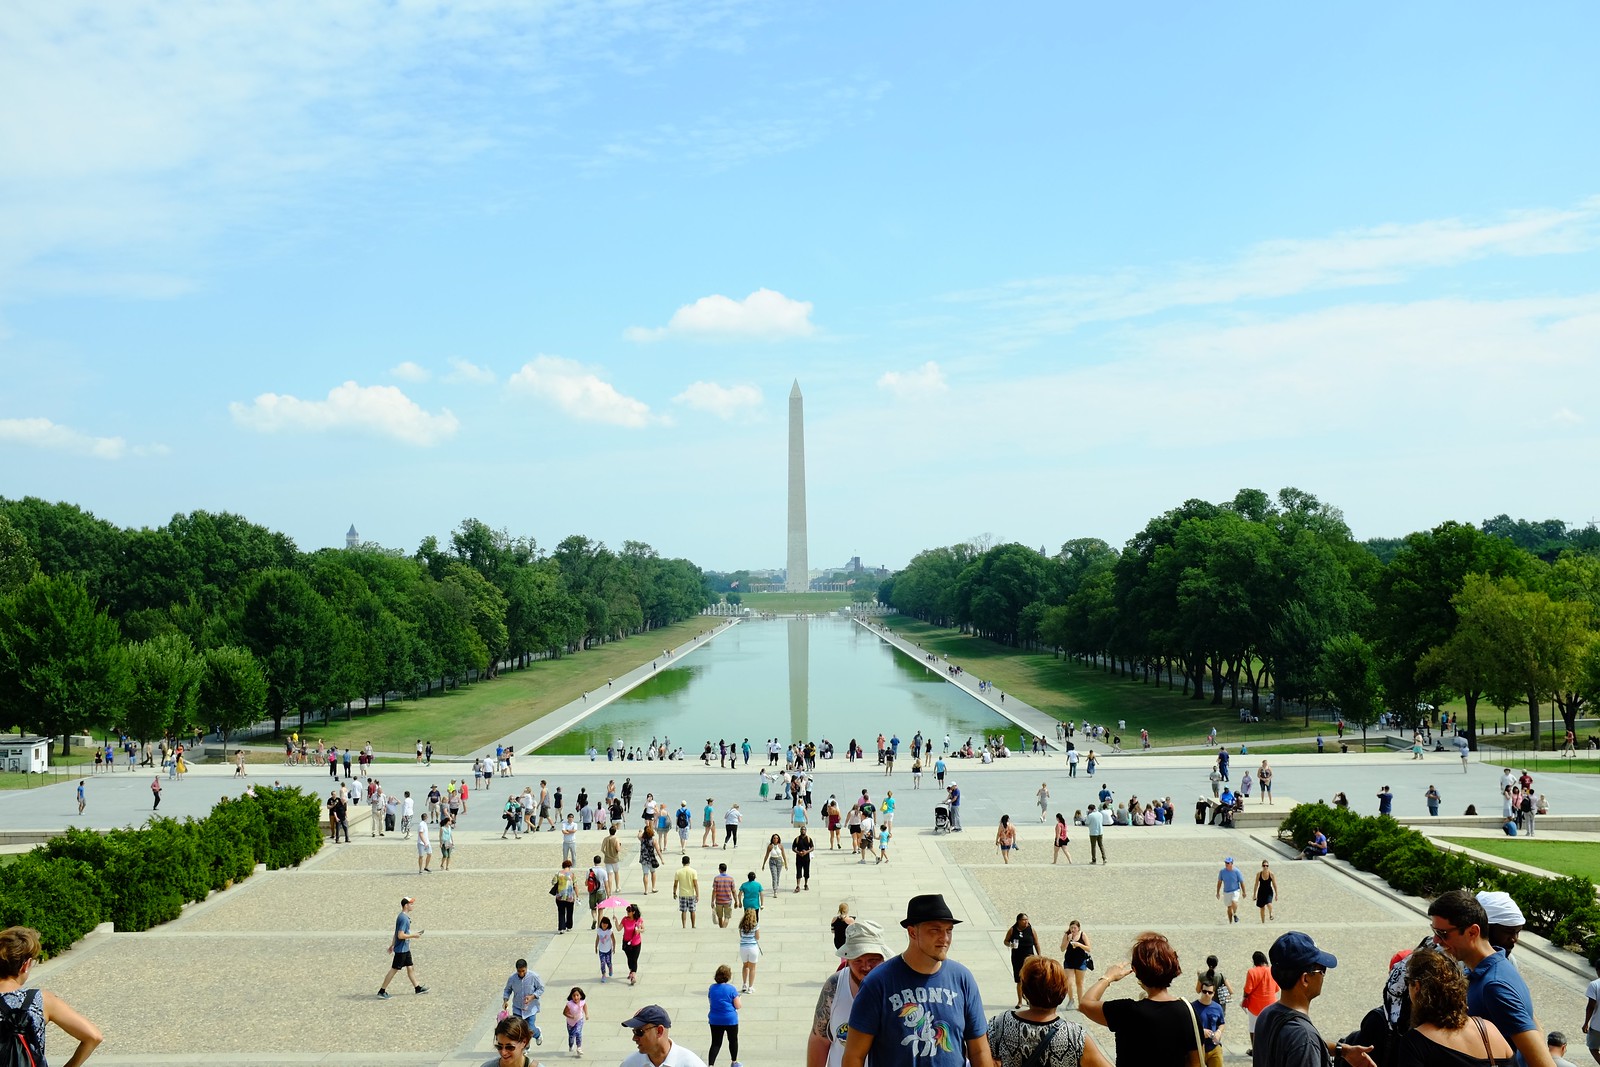 The Washington, D.C by FUJIFILM X100S.